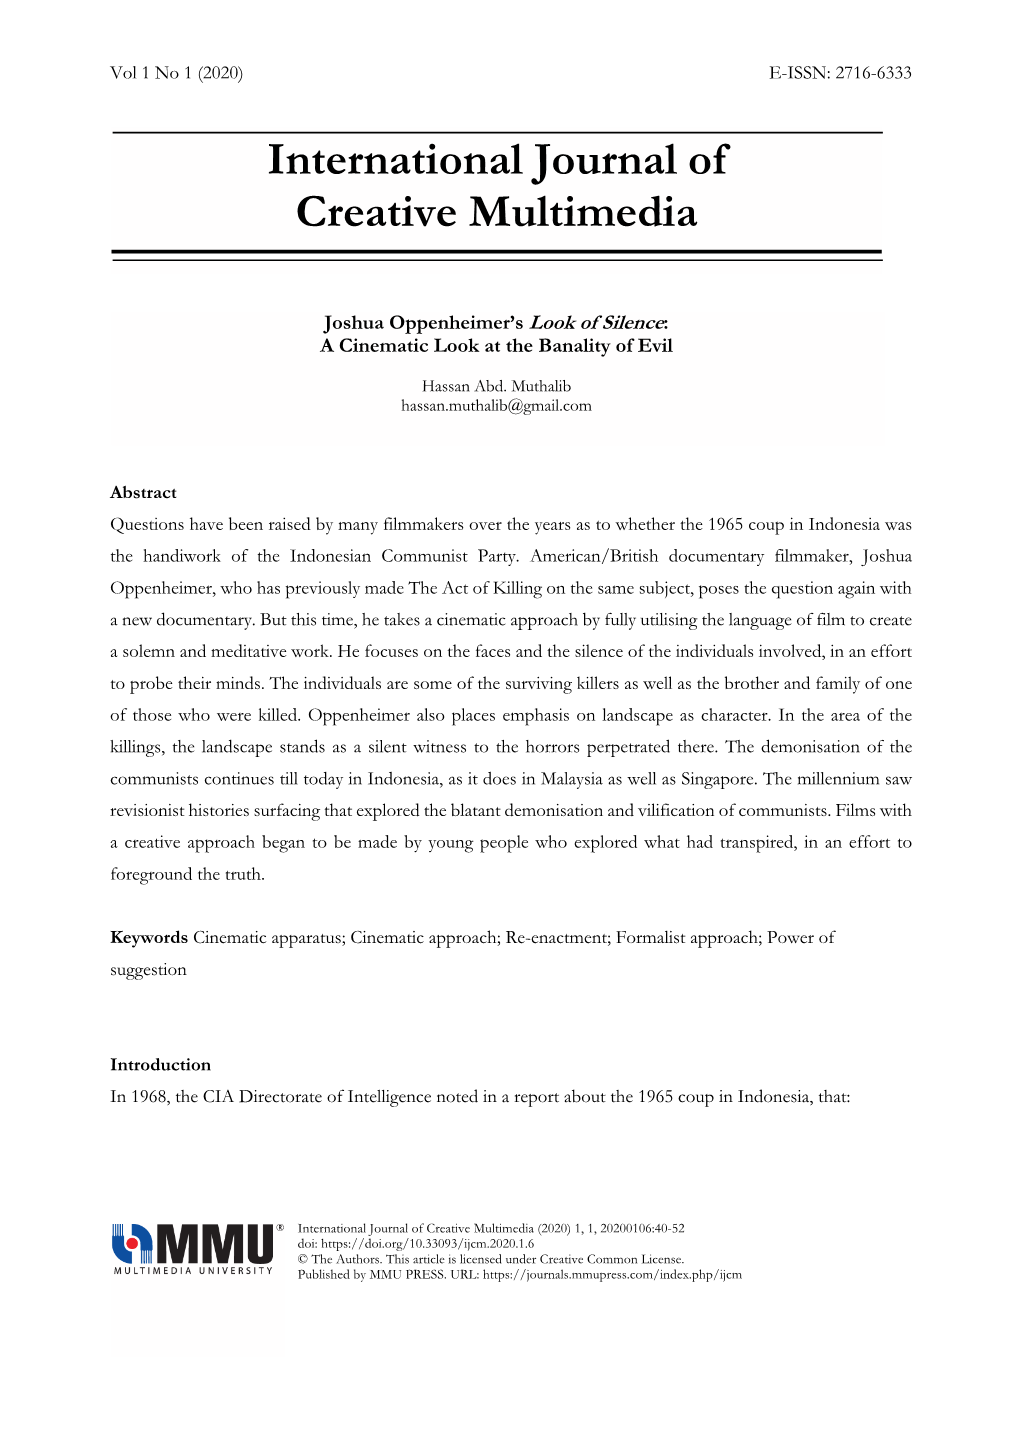 International Journal of Creative Multimedia